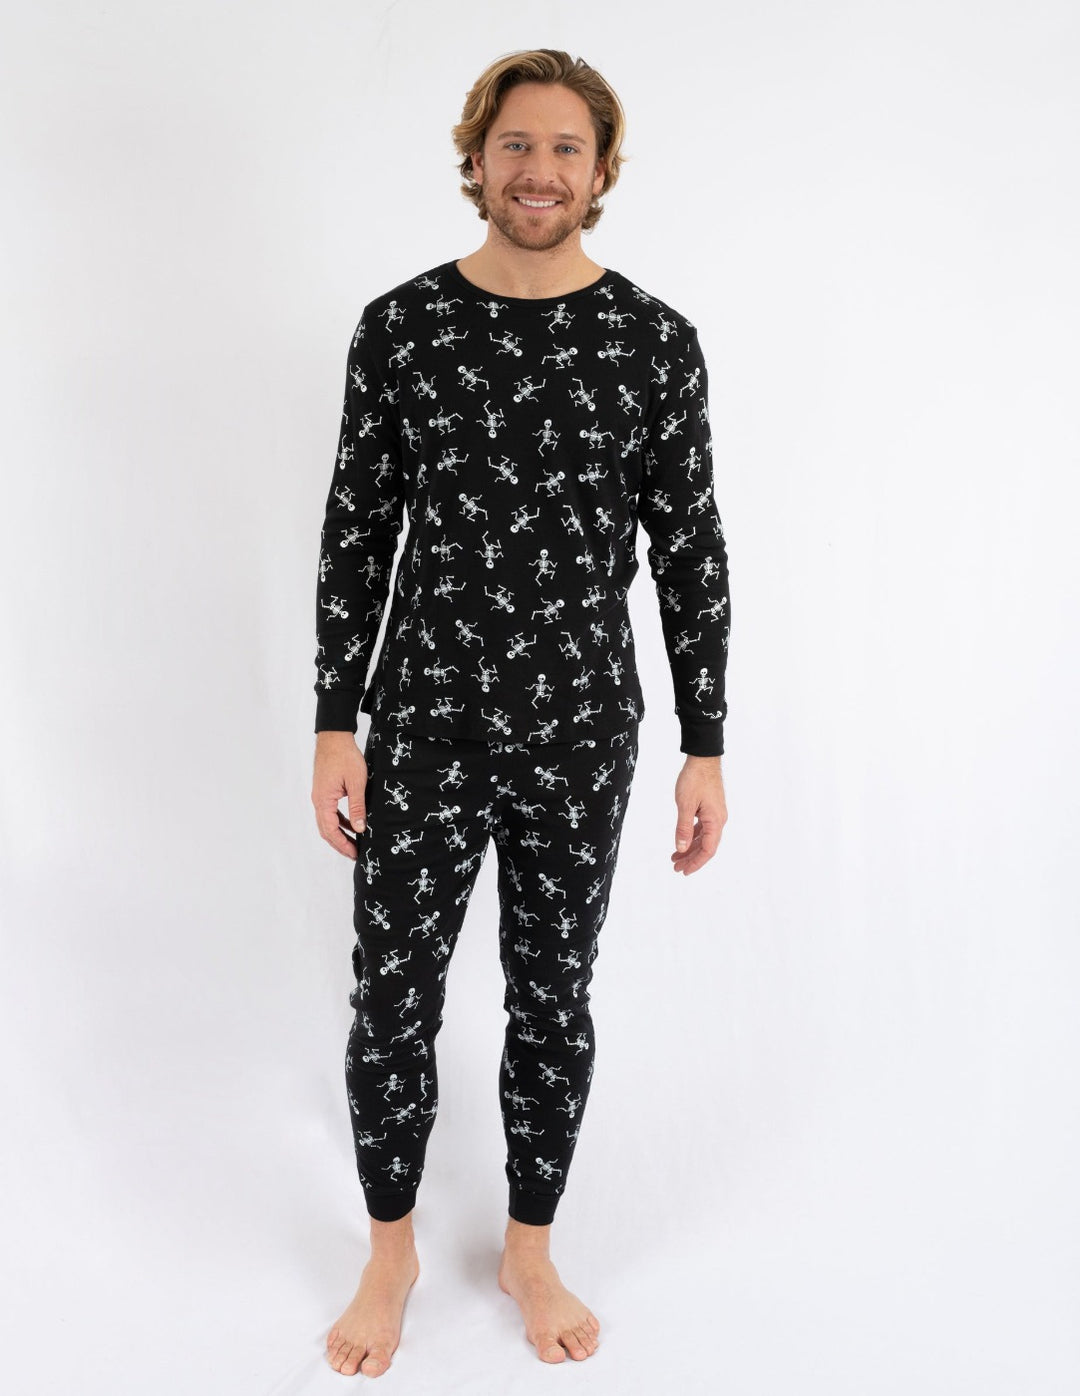 Haite Pajamas Outfits for Womoen Pjs Crew Neck T-Shirt Nightwear Loose  Plaid Lounge Pants Set Elastic Waist Sleep Bottoms With Pockets Black S 